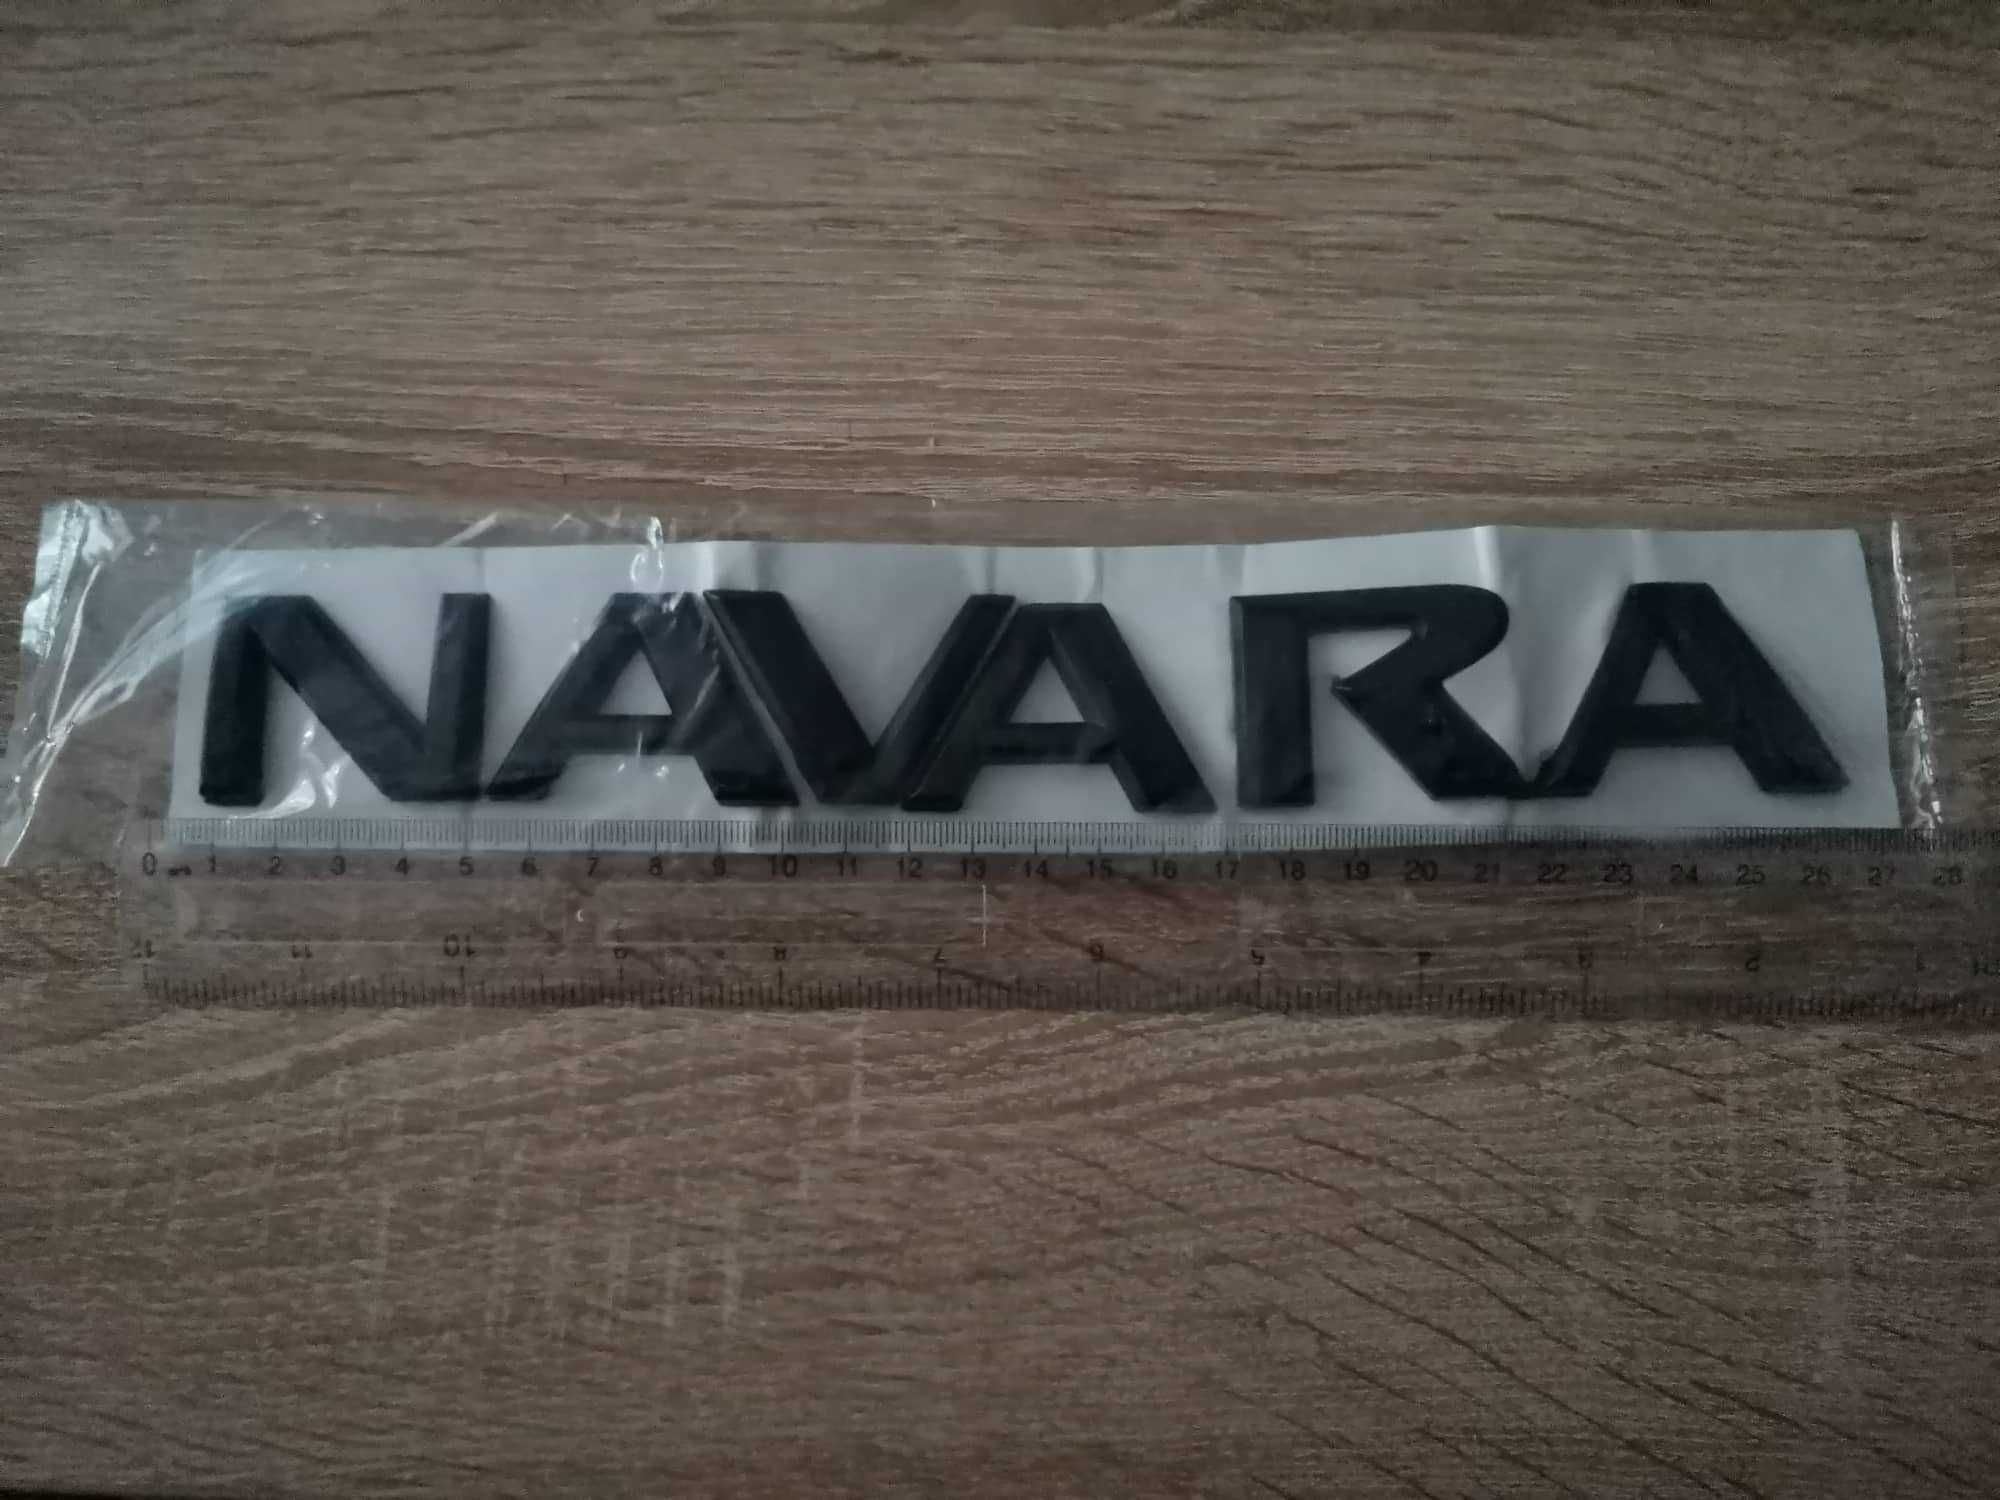 черен надпис емблема Нисан Навара Nissan Navara